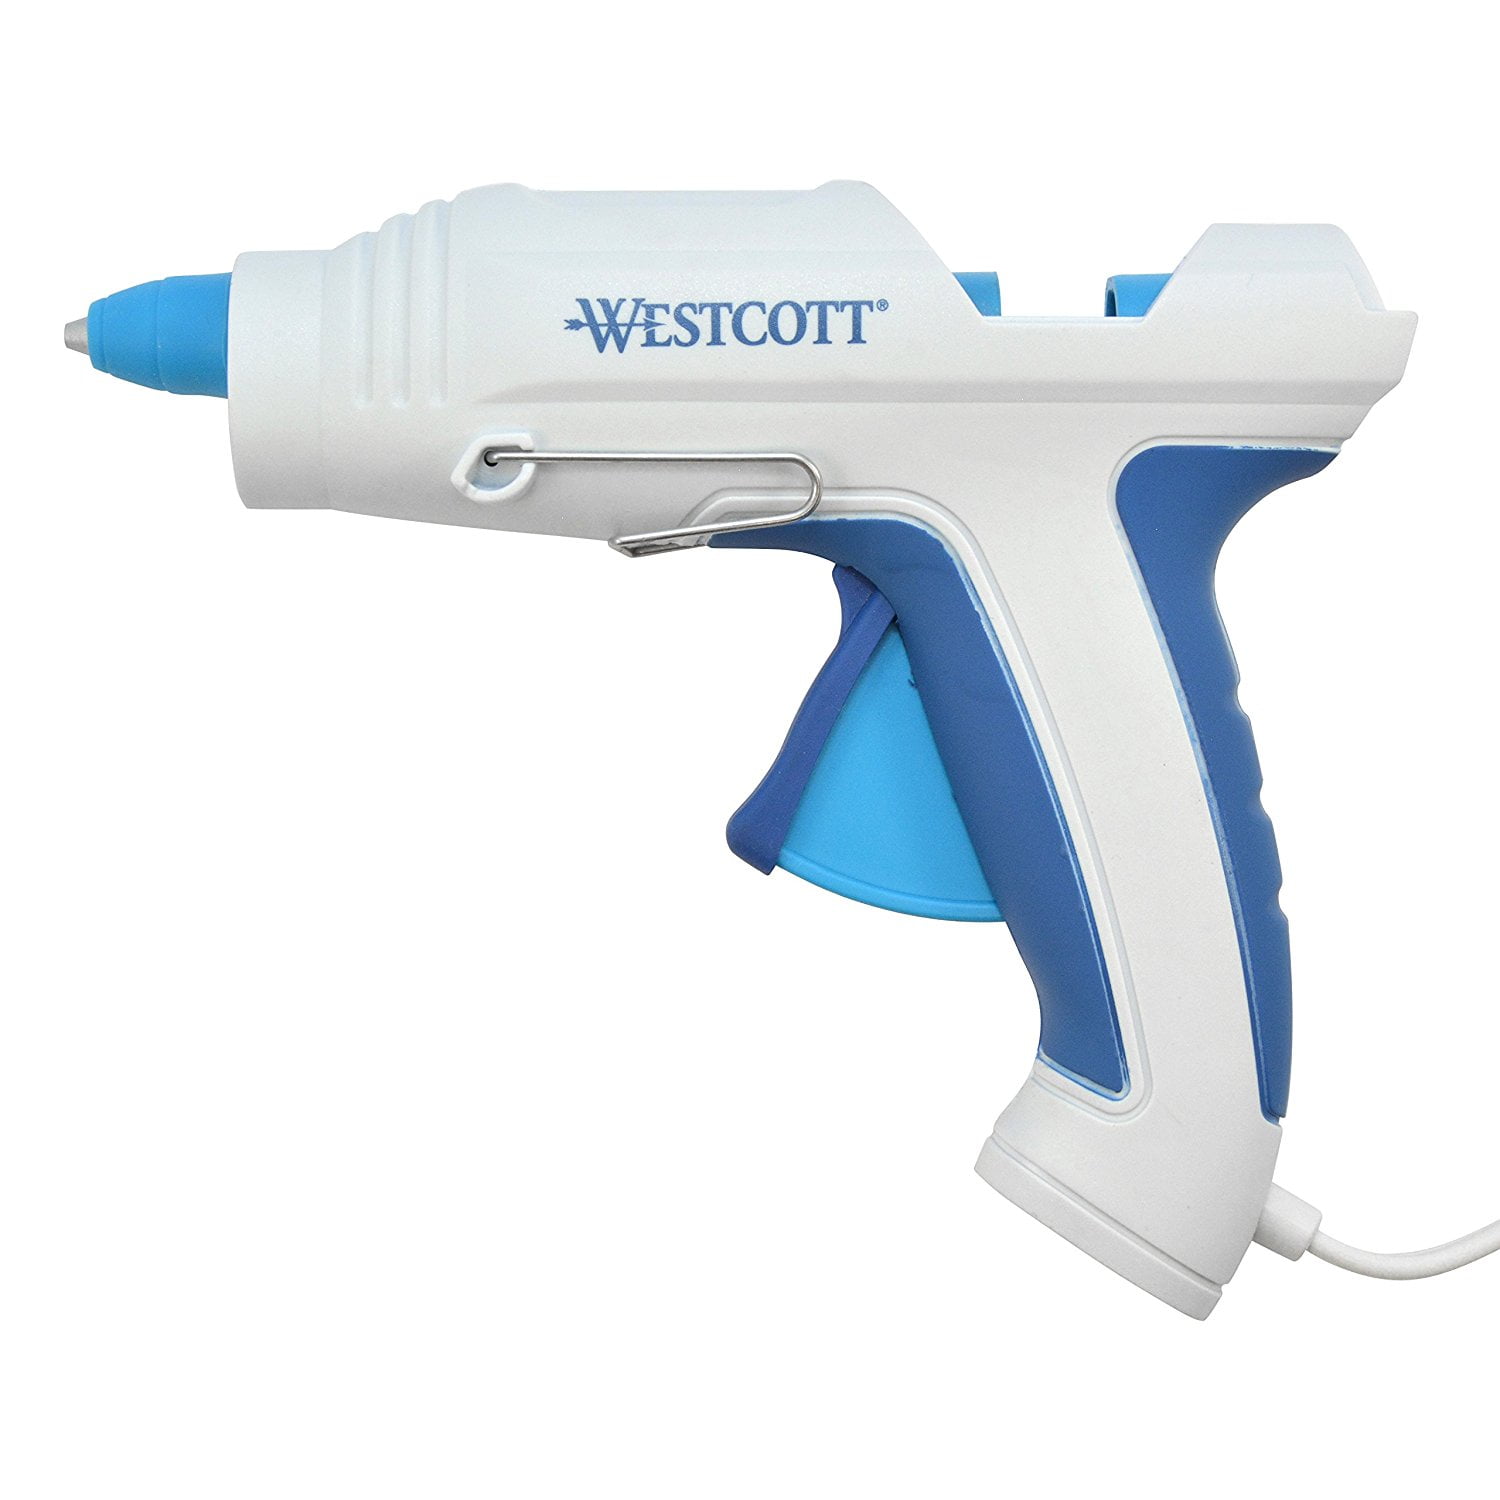 60-Watt Westcott Projectmate Premium Mid-Sized Hot Glue Gun (White/Blue) $2.70  + Free S&H w/ Walmart+ or $35+